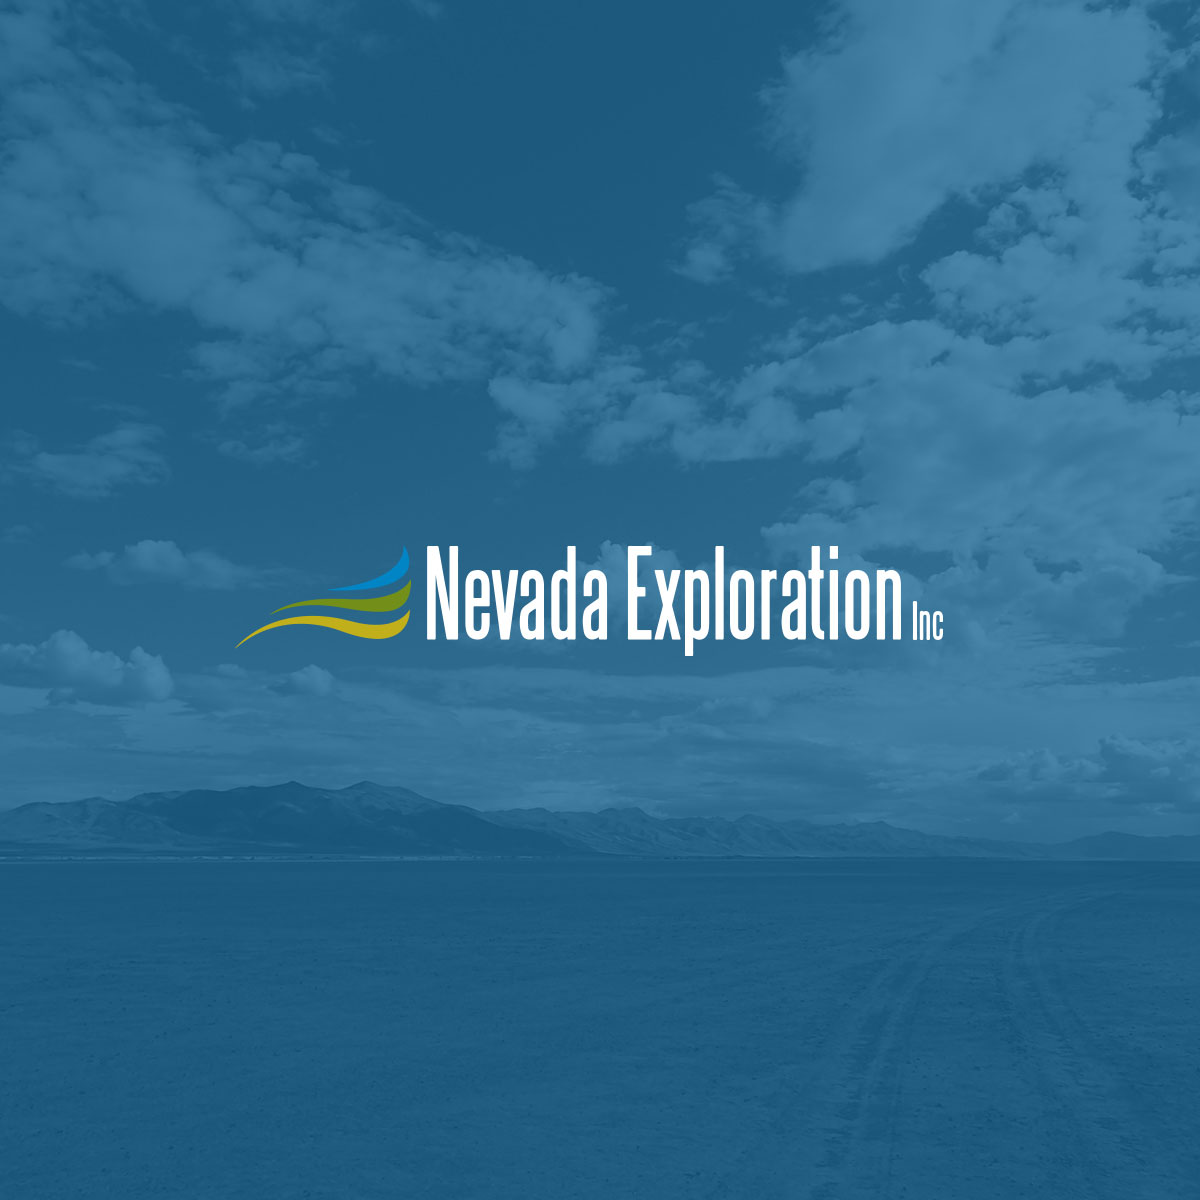 Nevada Exploration